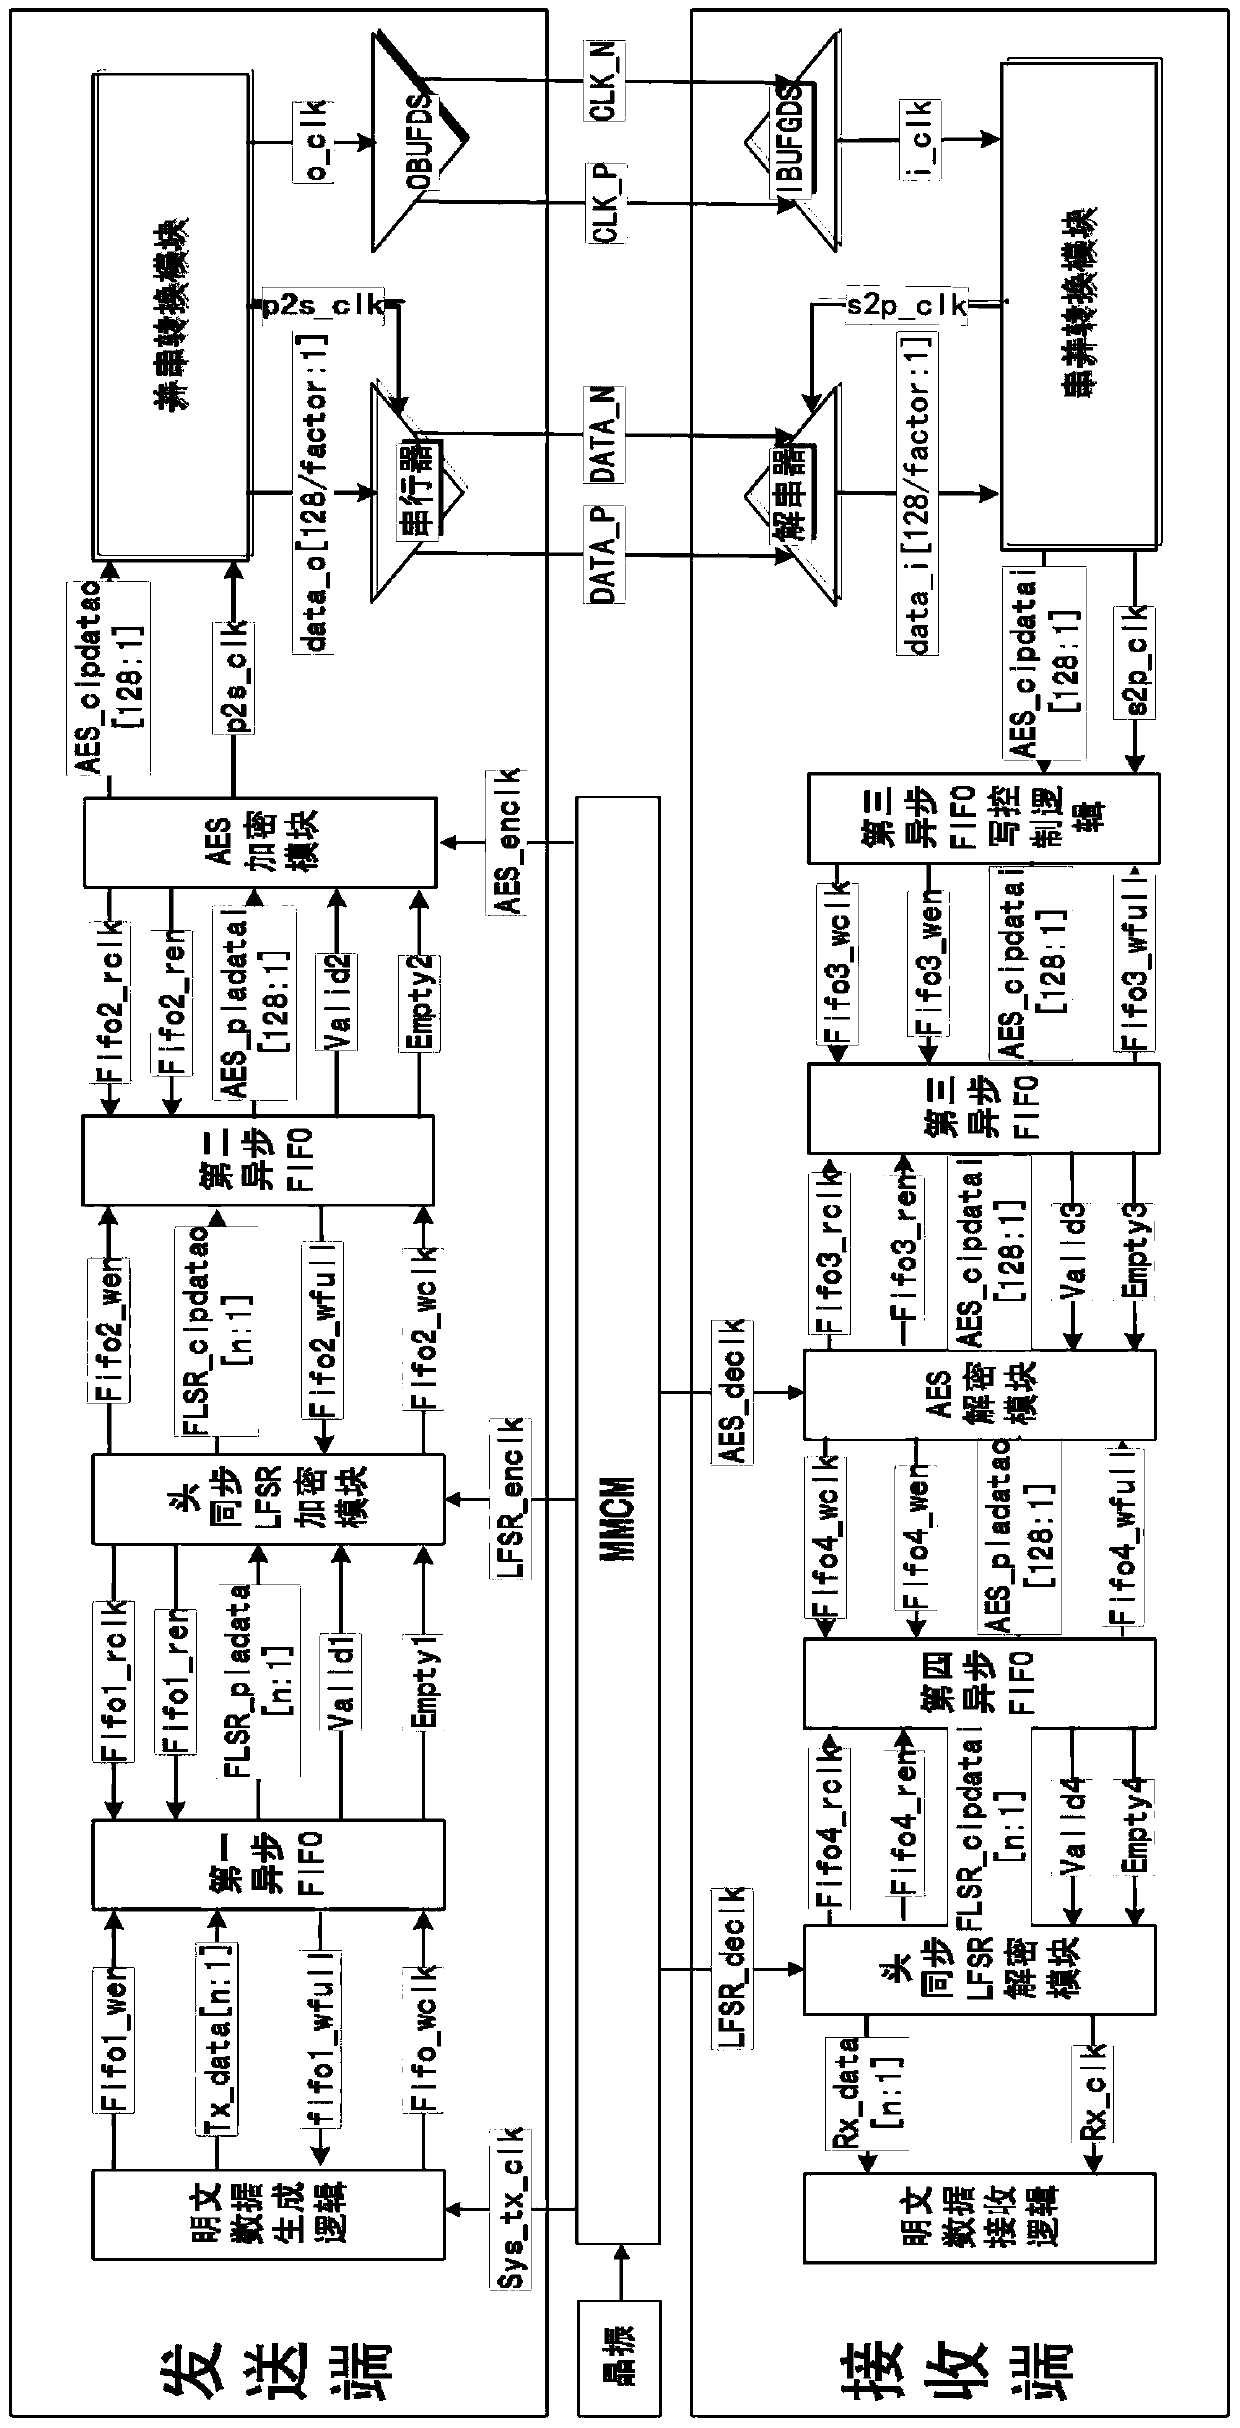 A kind of fpga virtual io inter-chip interconnection digital circuit based on re-encryption algorithm